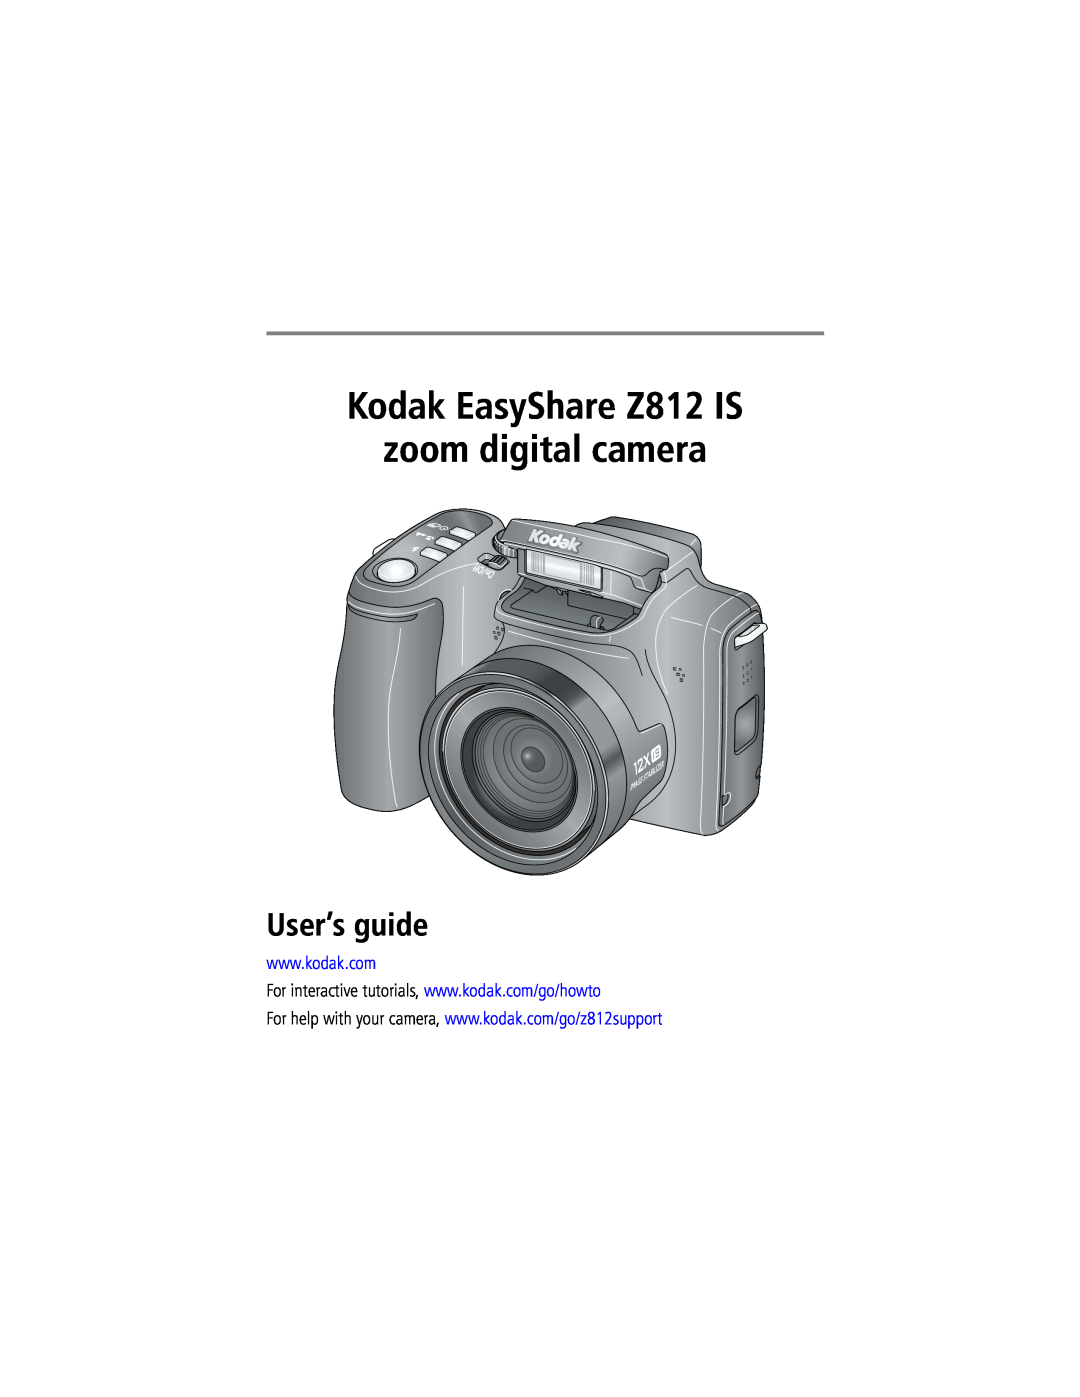 Kodak manual Kodak EasyShare Z812 IS zoom digital camera, User’s guide 